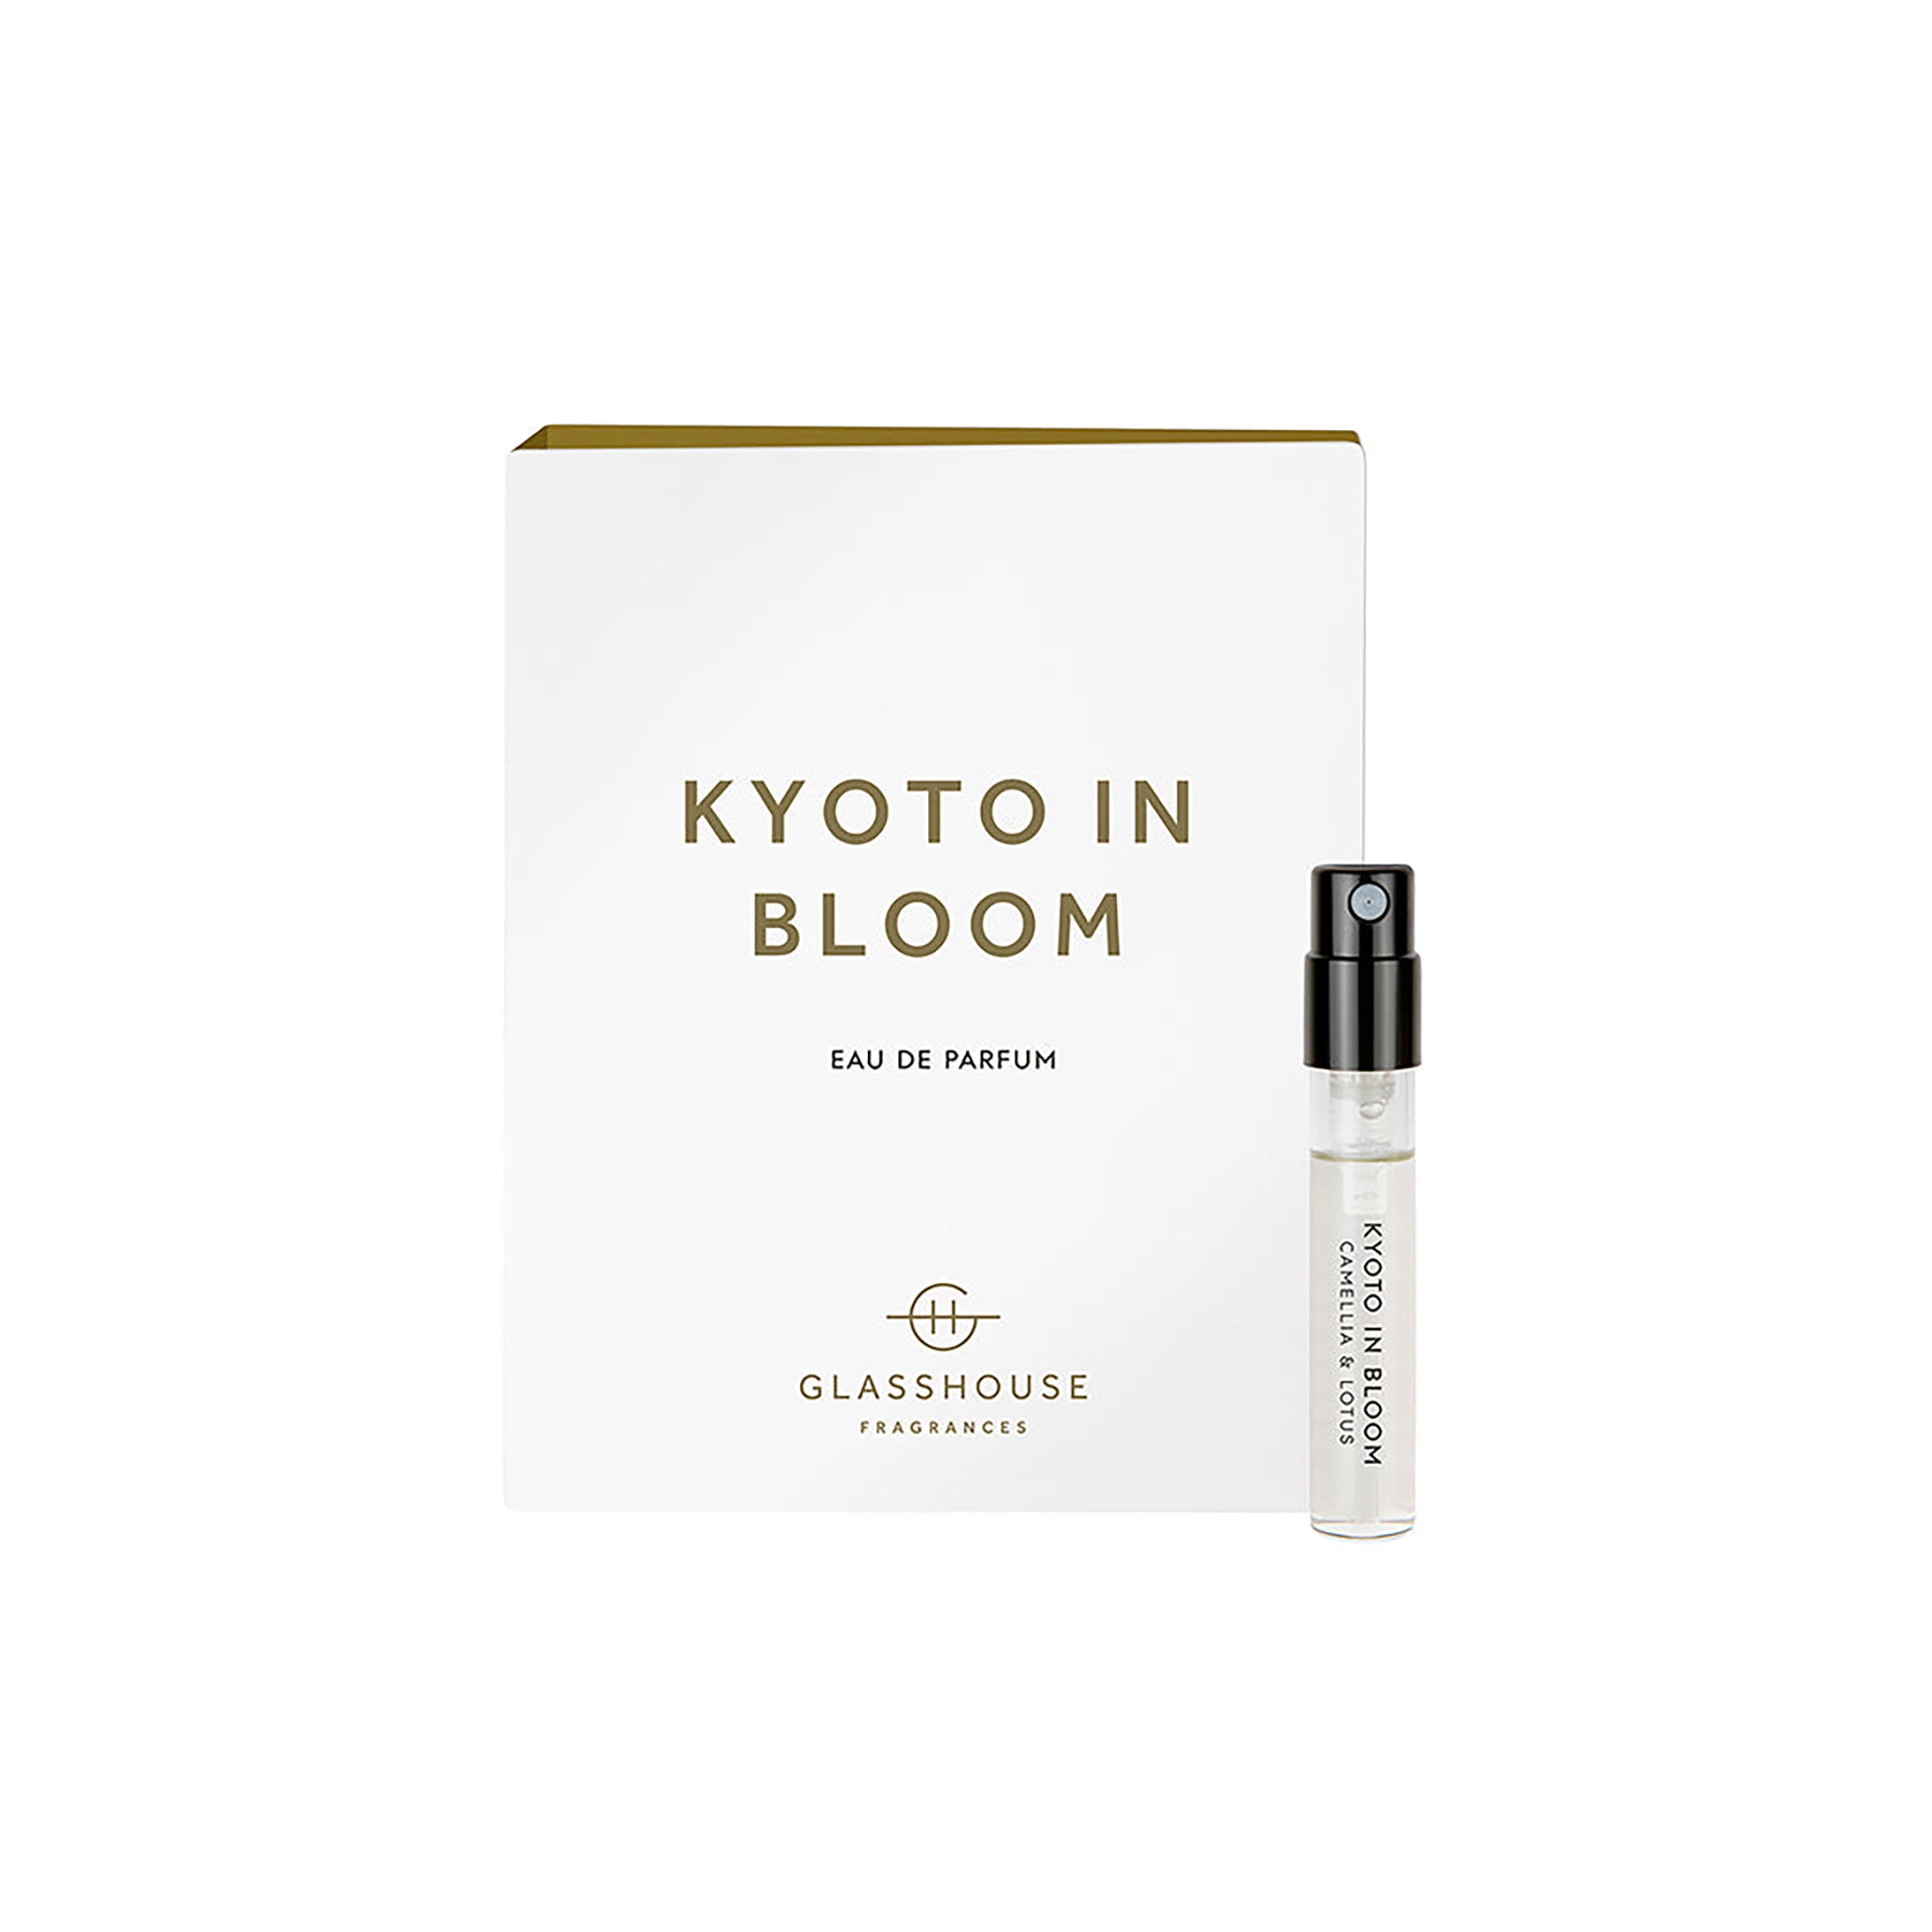 Glasshouse Fragrances Kyoto in Bloom Camellia and Lotus  1.8g Sample Eau de Parfum spray and box